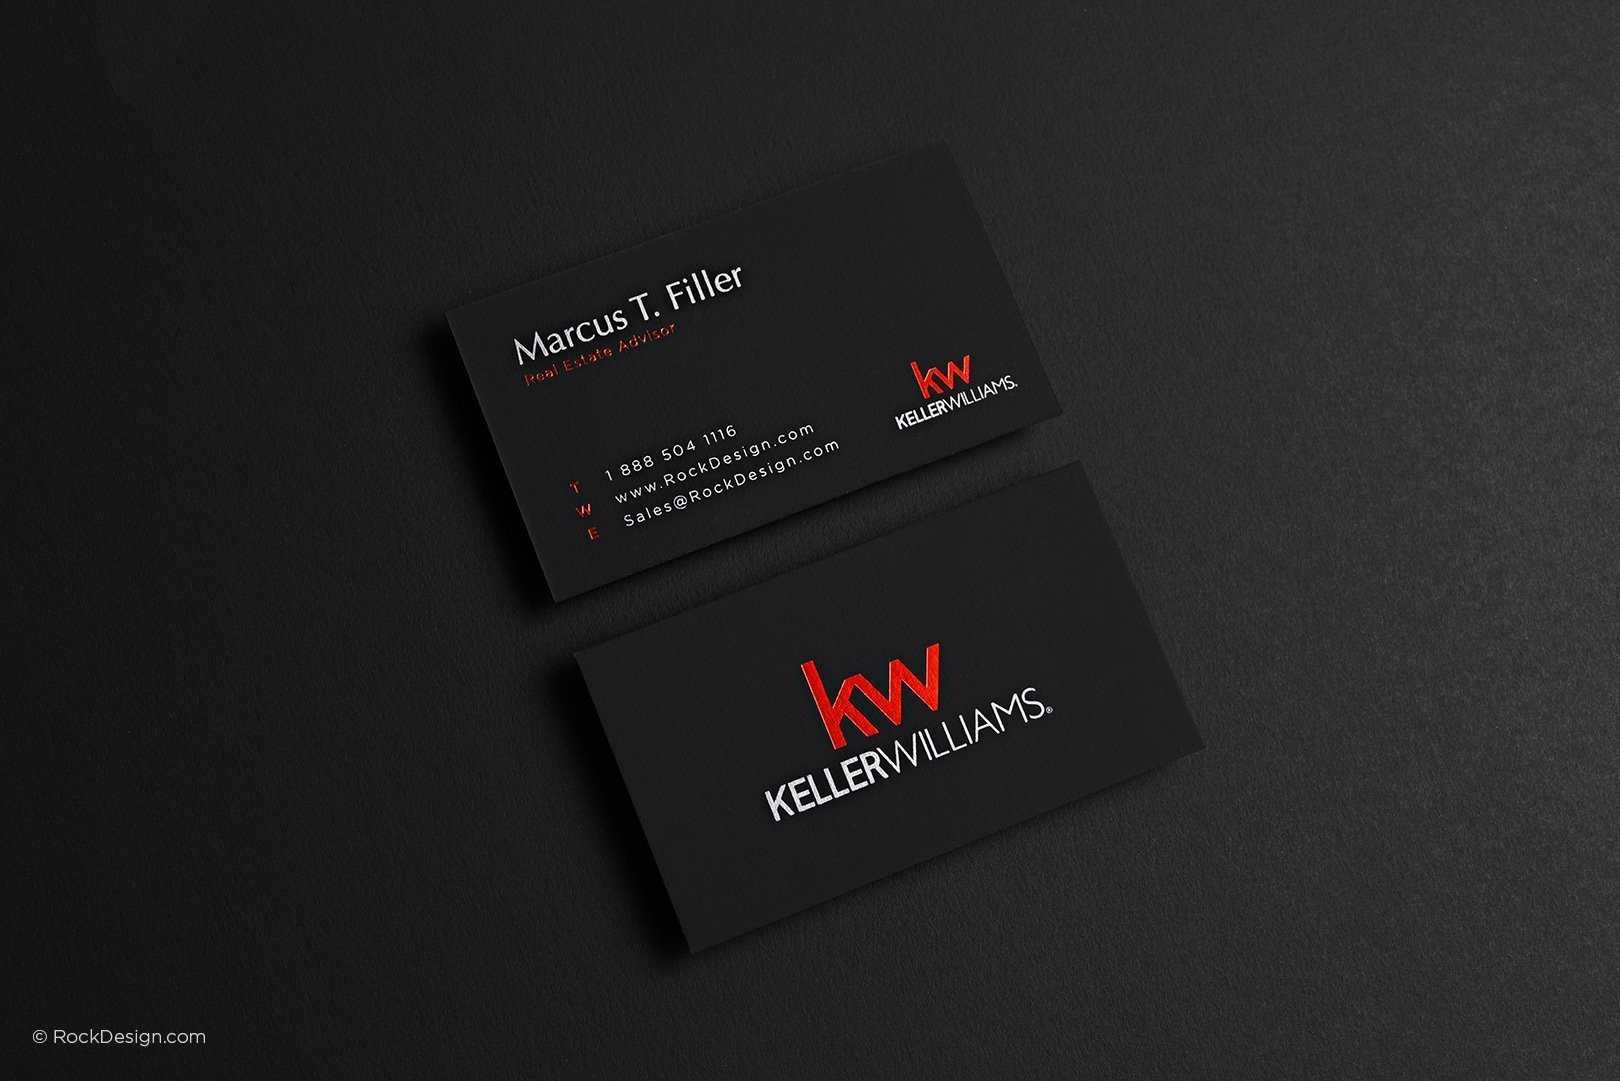 Keller Williams Business Card In Keller Williams Business Card Templates